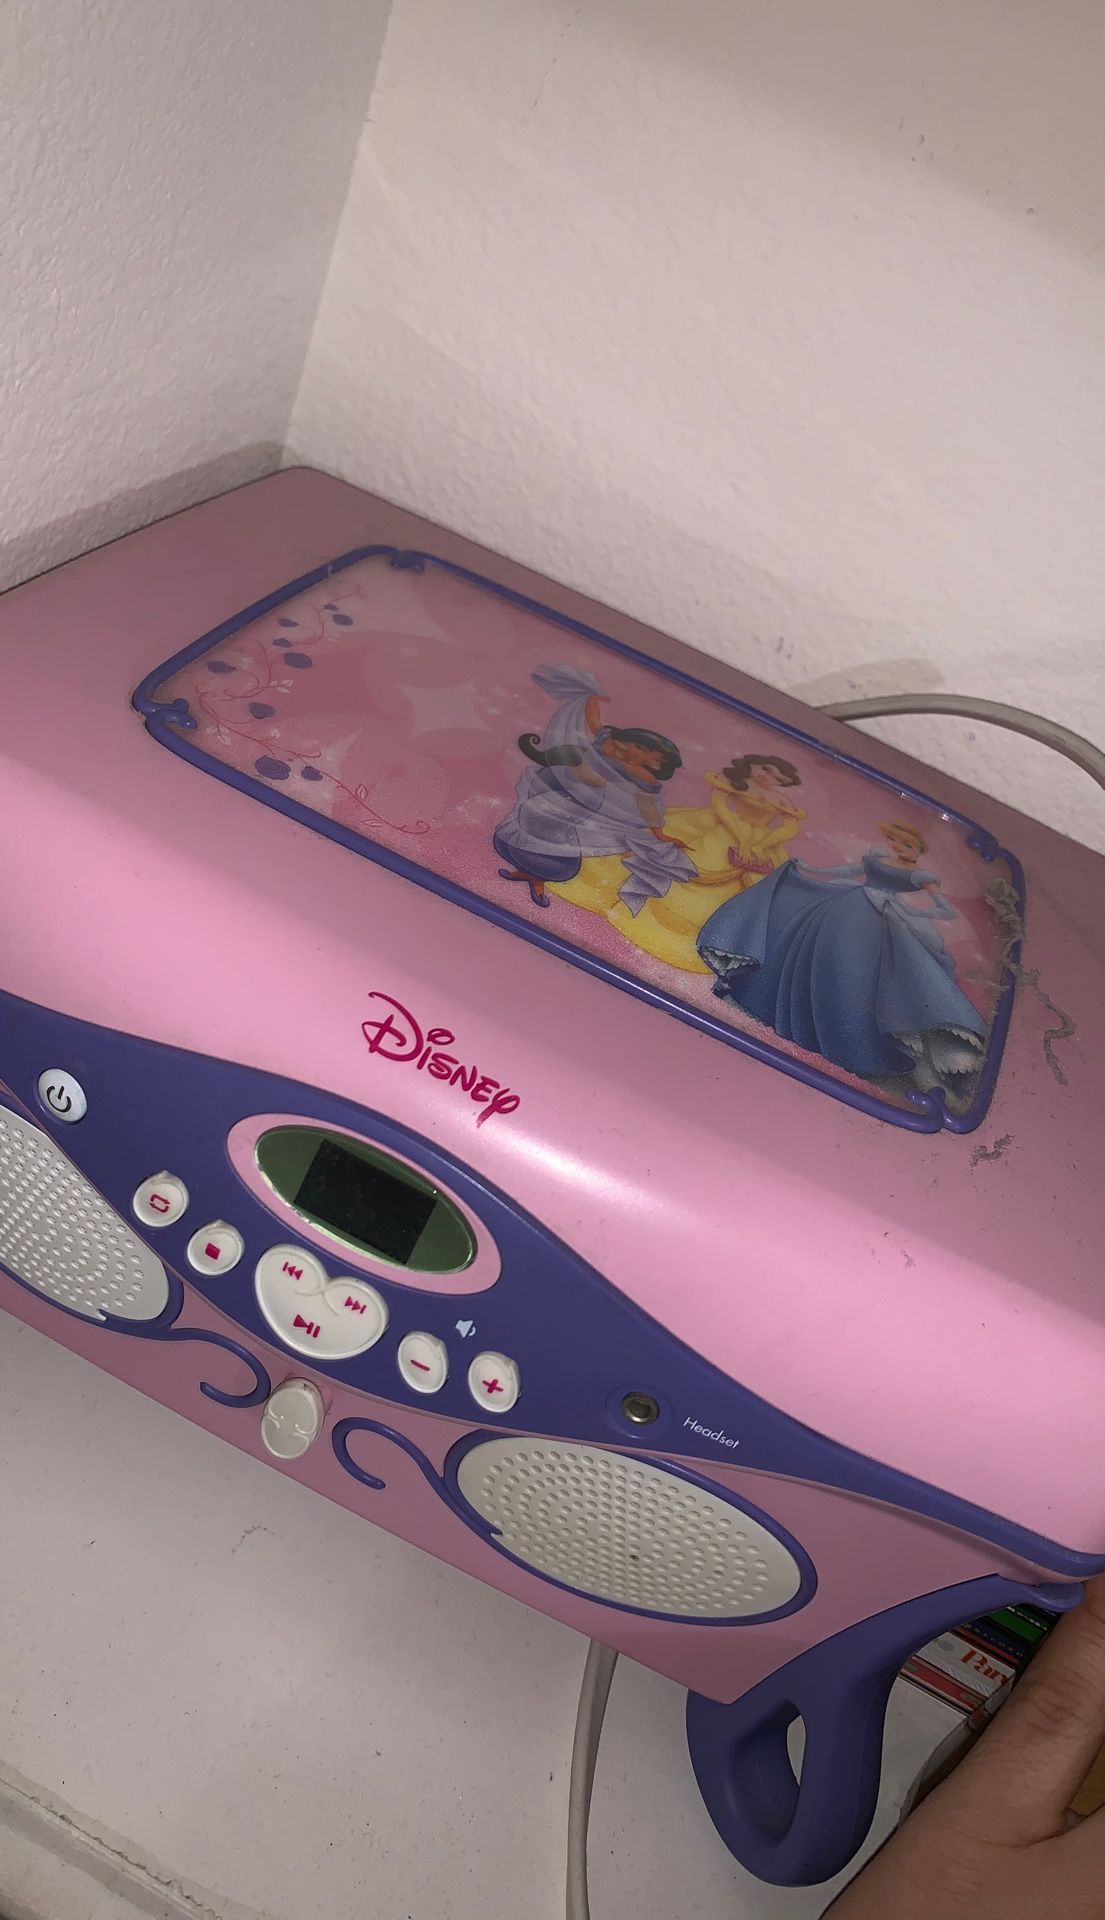 Disney princess CD player and jewelry box